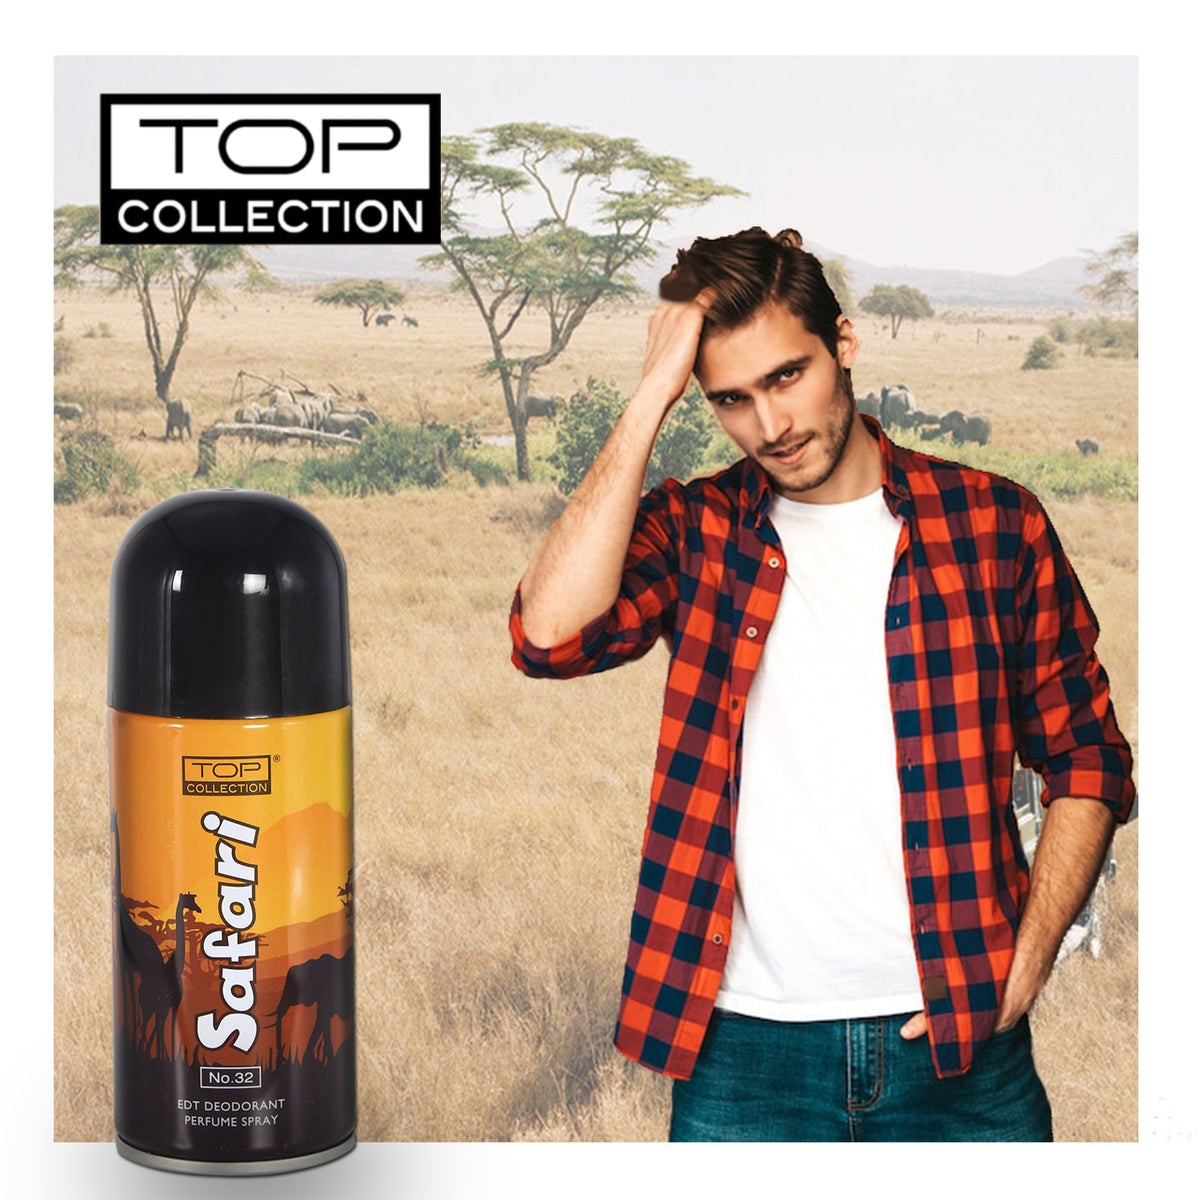 Top Collection Eau De Toilette Deodrant Perfume Spray - Safari, 150ml